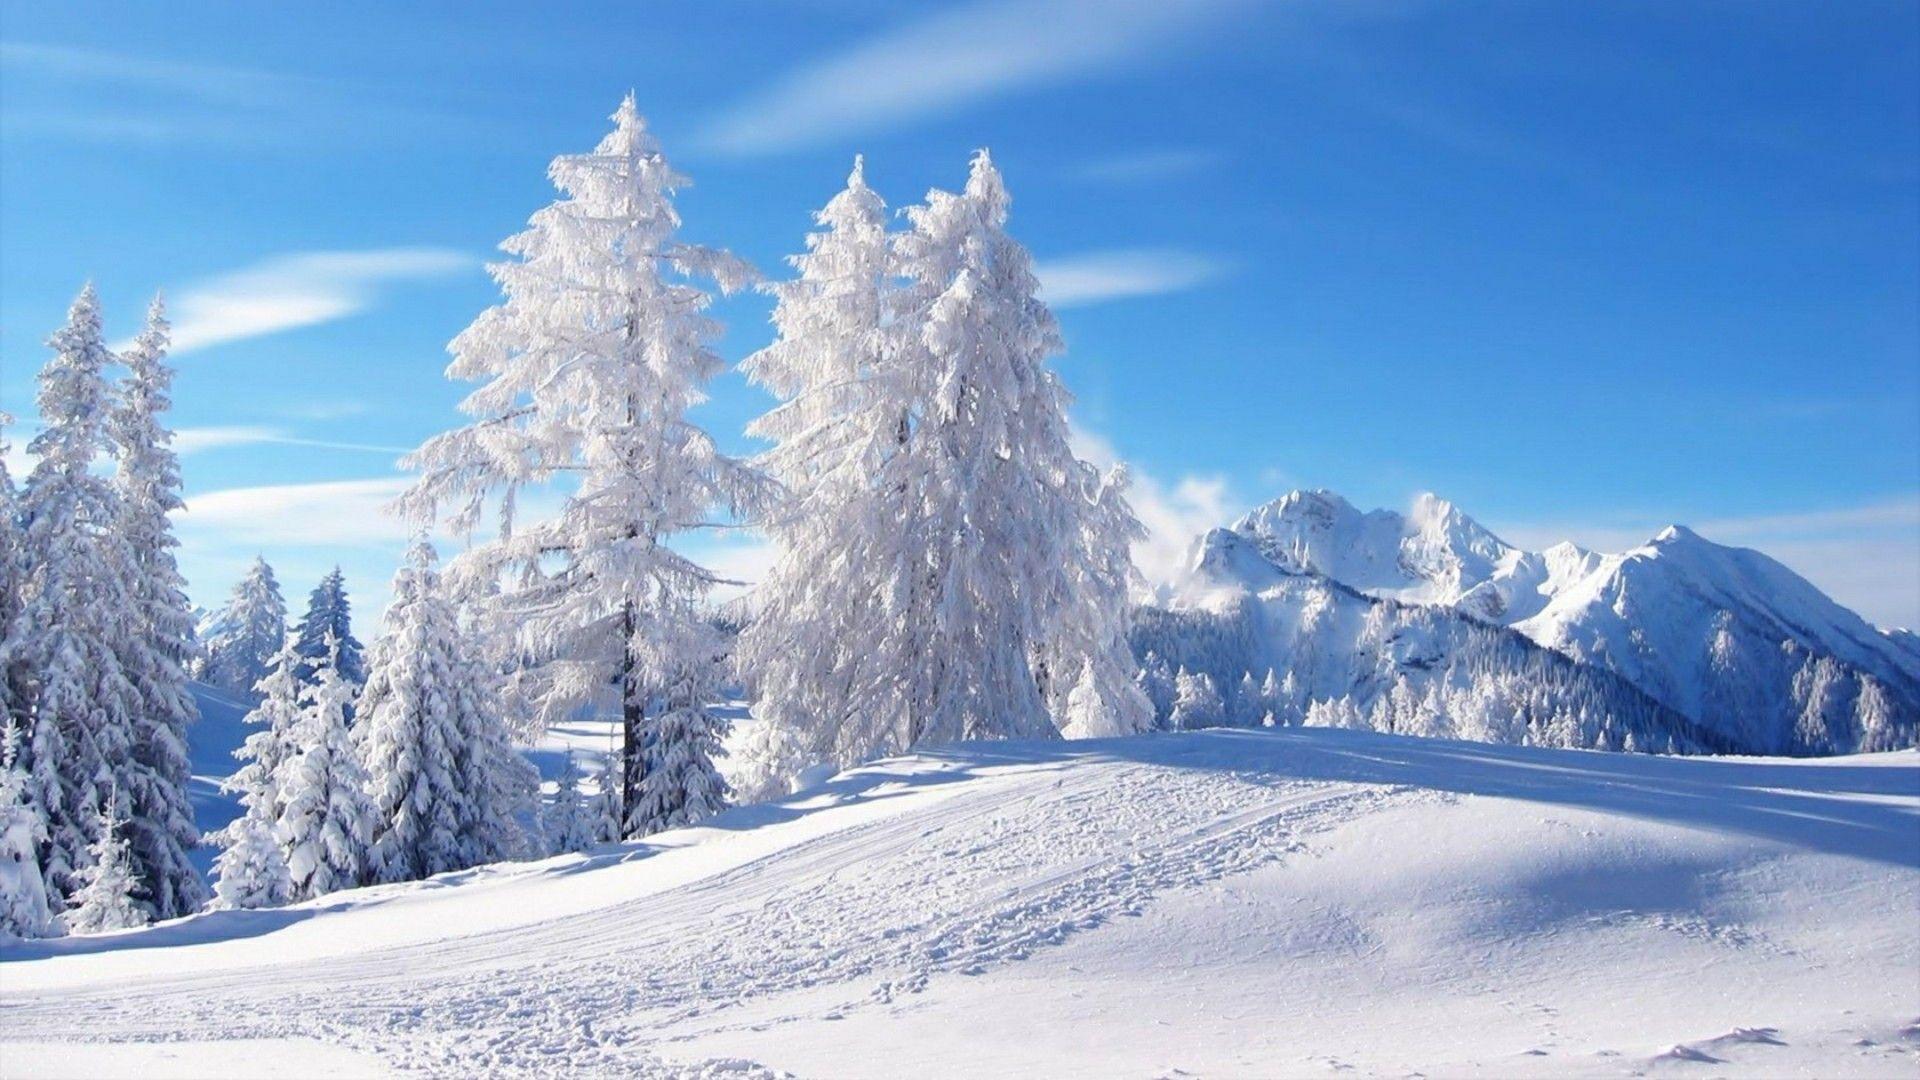 Snowy Landscape Wallpapers - Top Free Snowy Landscape Backgrounds